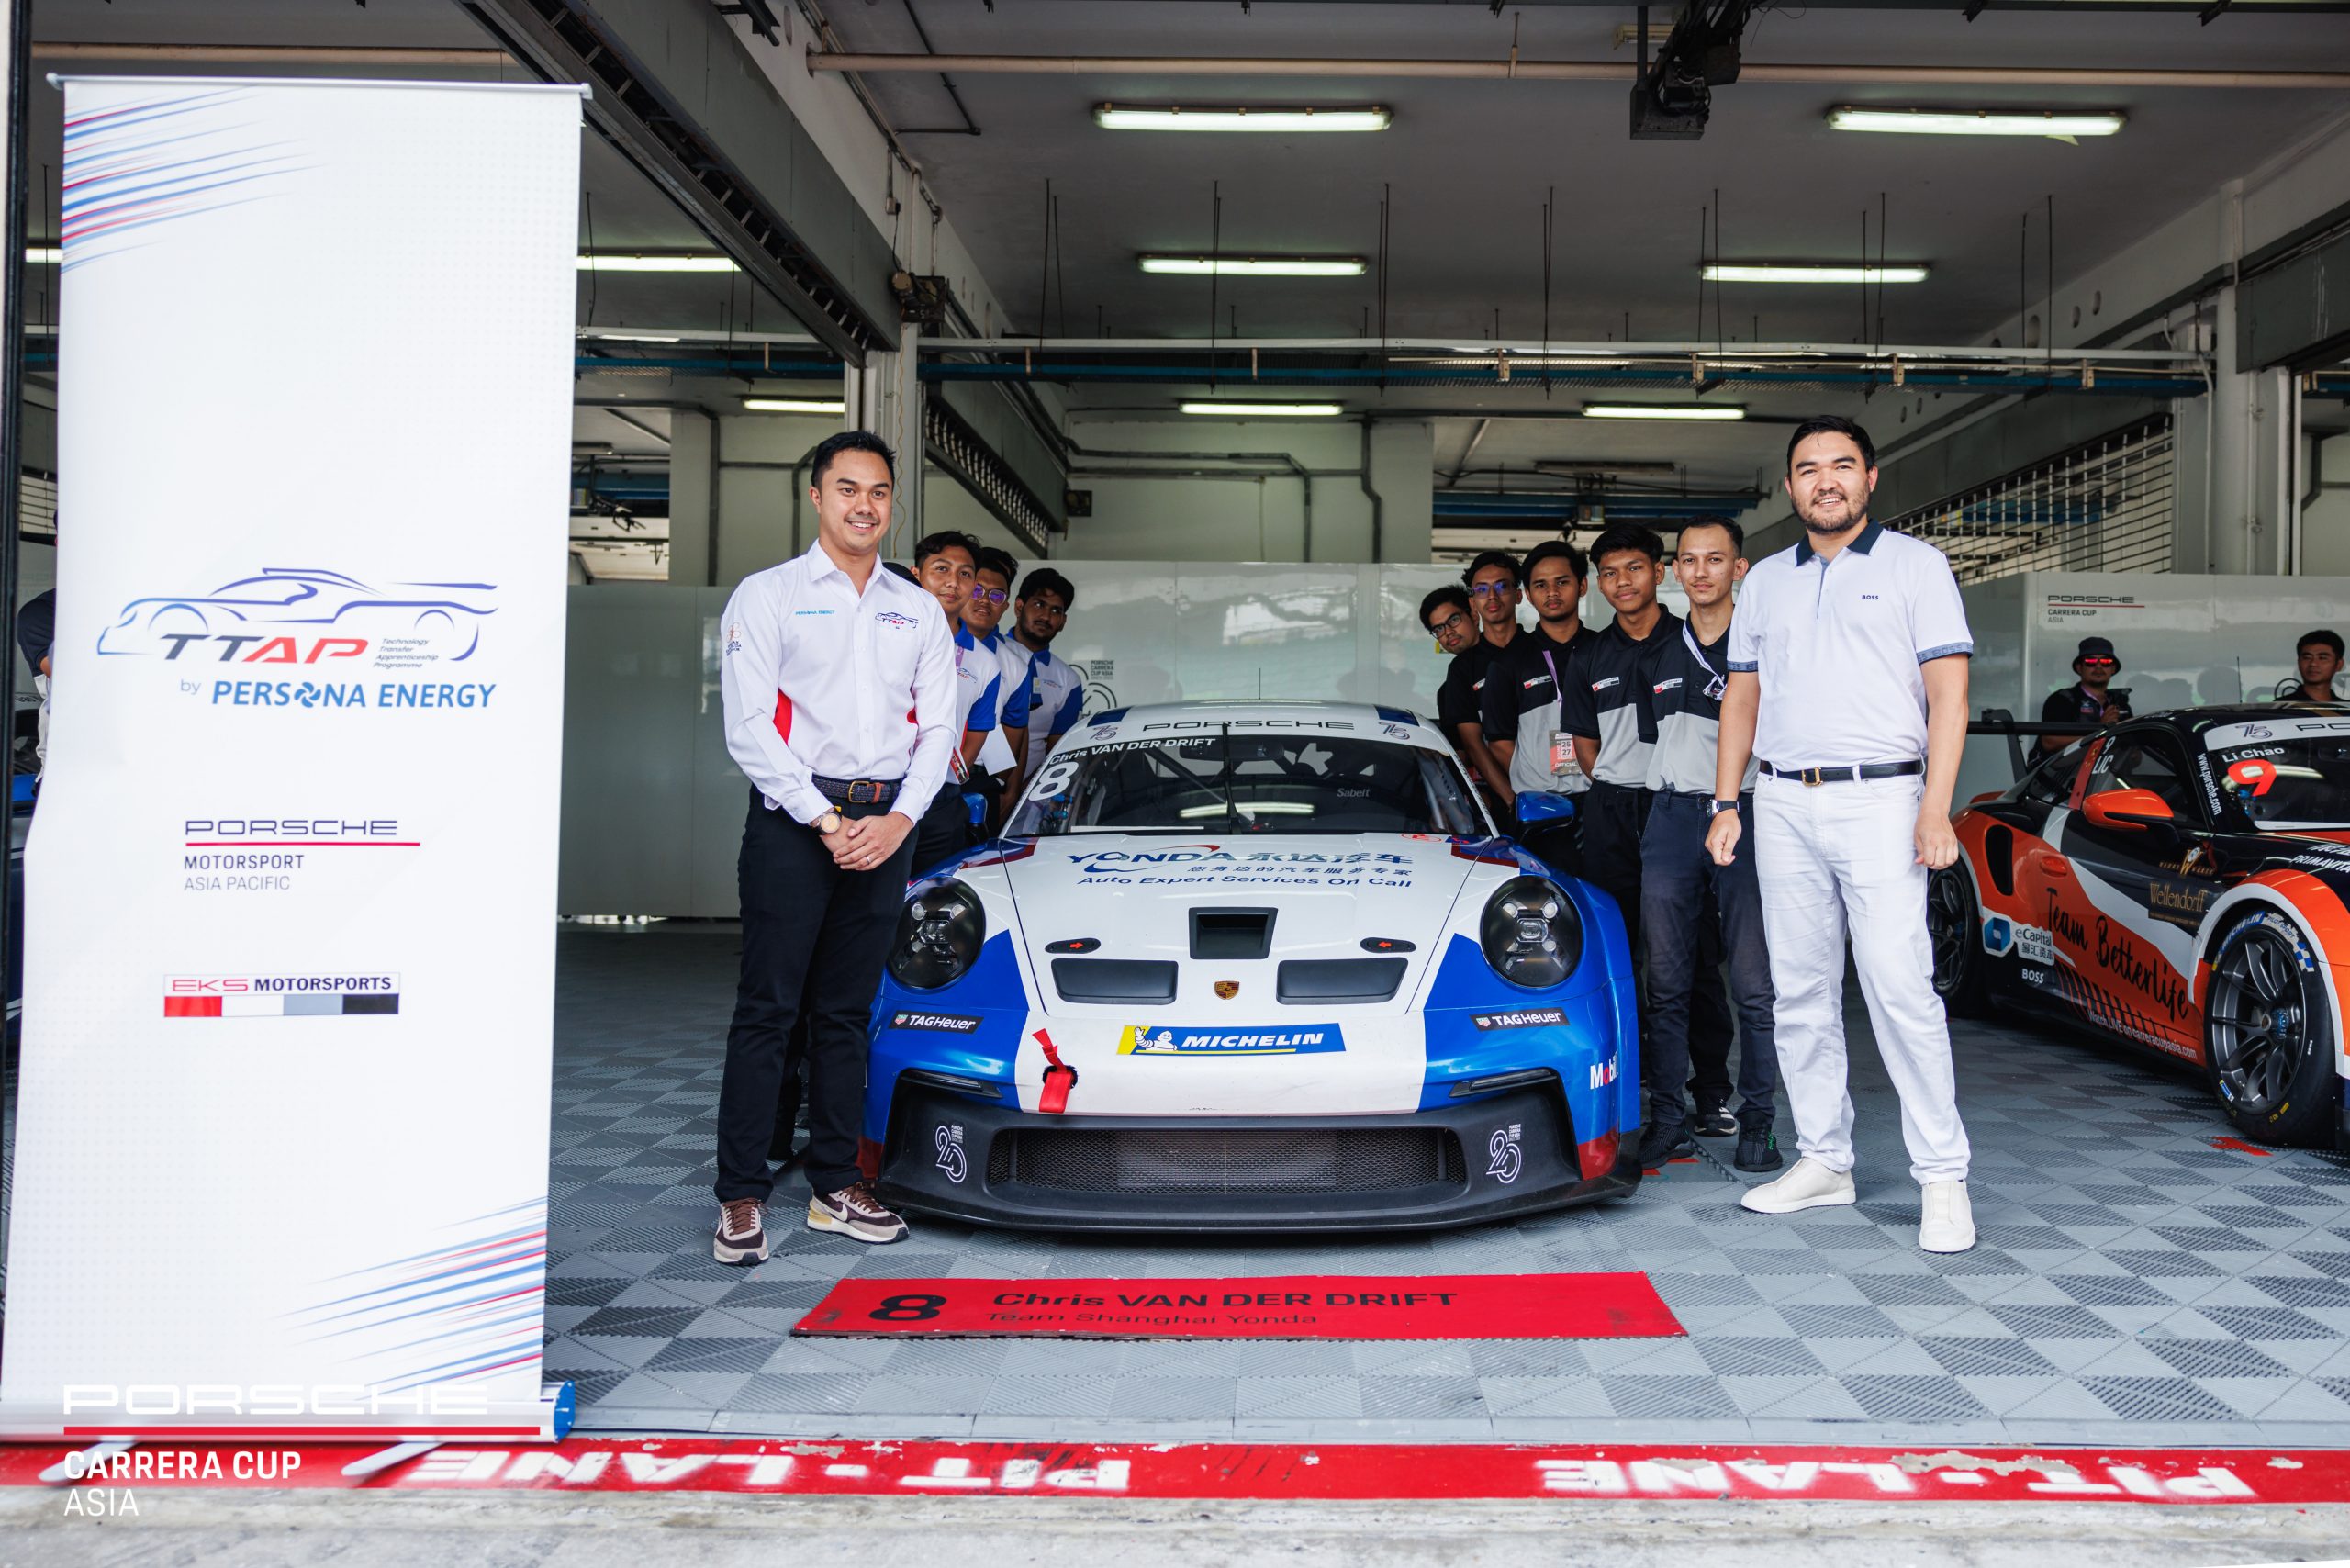 YRMS sponsors Selangor technicians for Porsche apprenticeship at 2023 Carrera Cup